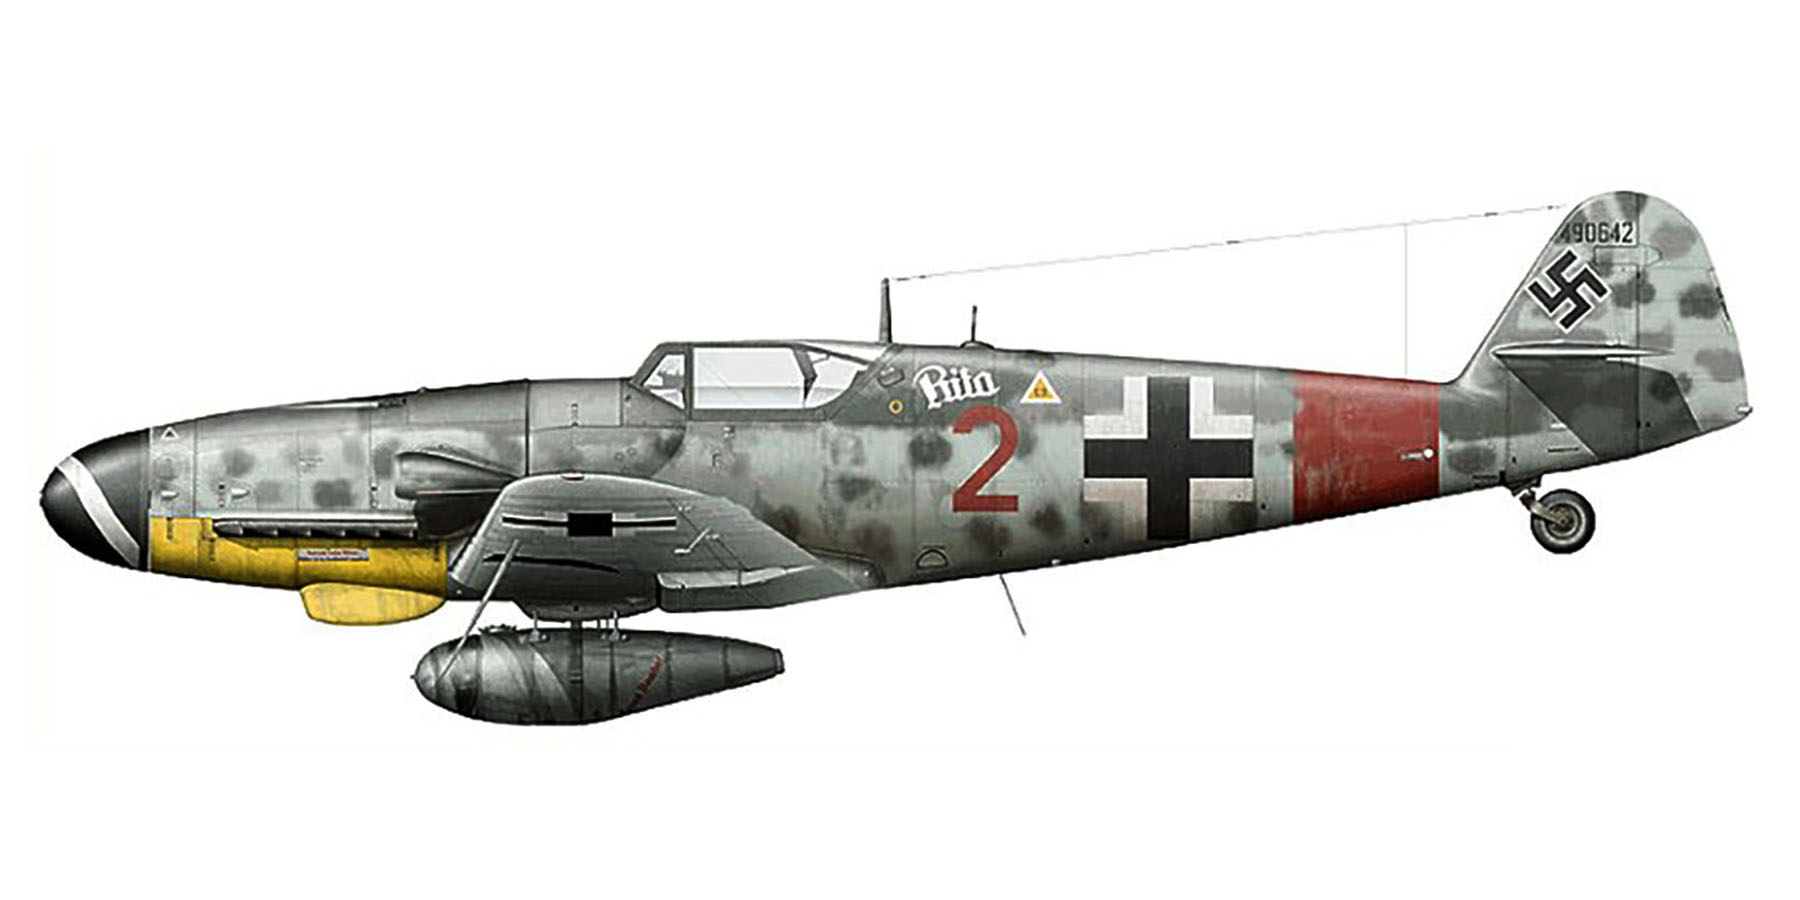 Messerschmitt Bf 109G6R3 2.JG300 Red 2 Rita WNr 490642 Eberhard Gzik Brandenburg Dec 1944 0B